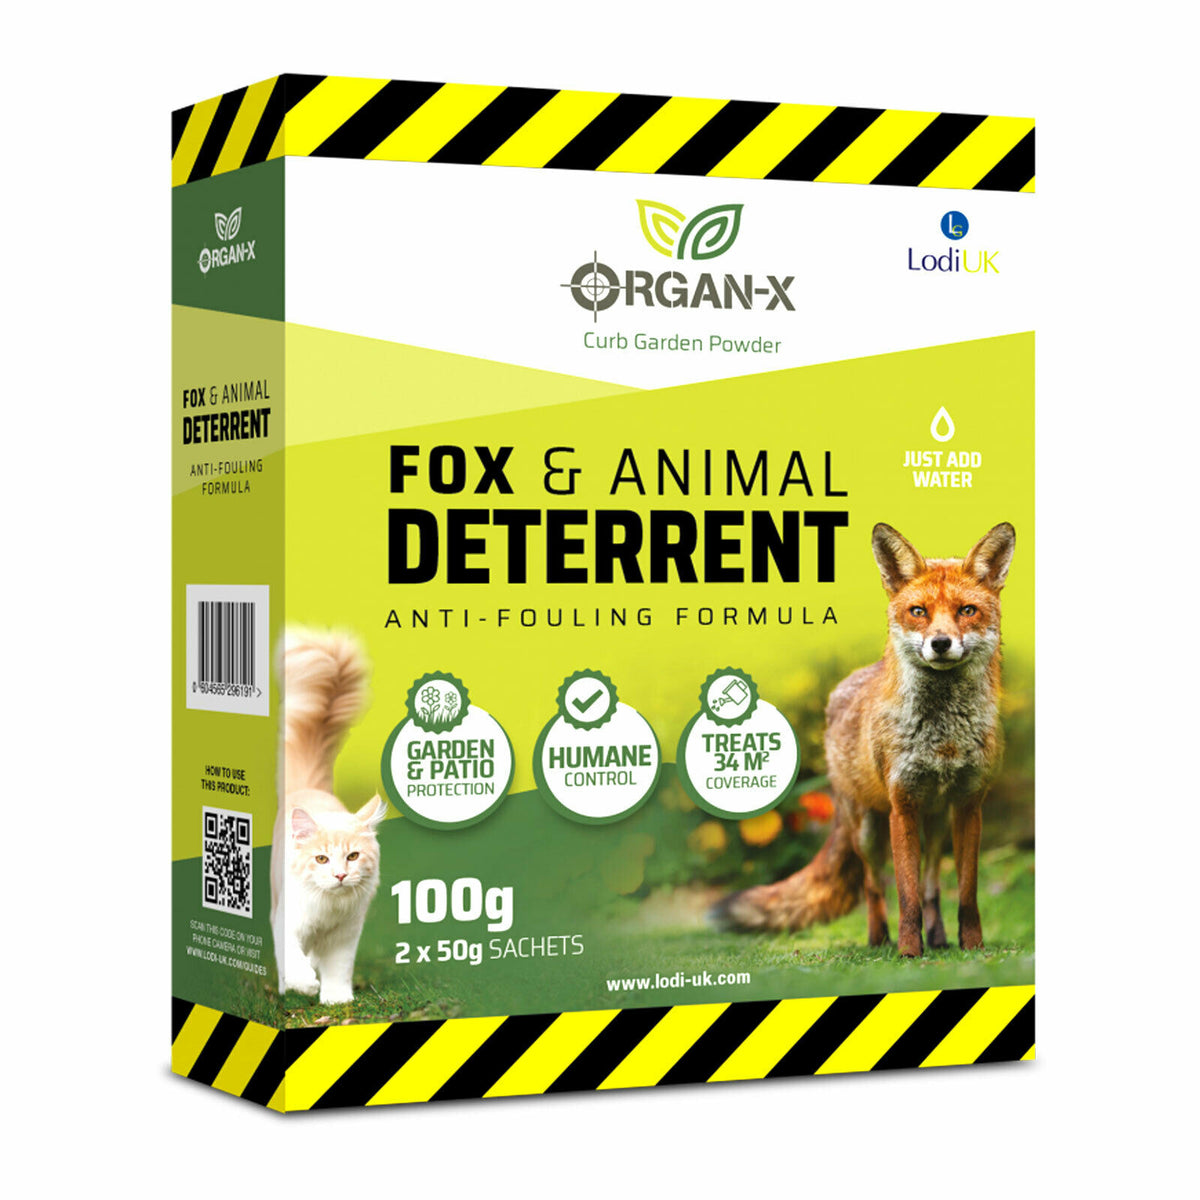 Animal Repellent Cats Dog Deer Rabbit Foxes Cat-A-Pult - Organ X - 100g (50g x 2 Sachets) - Moth Control